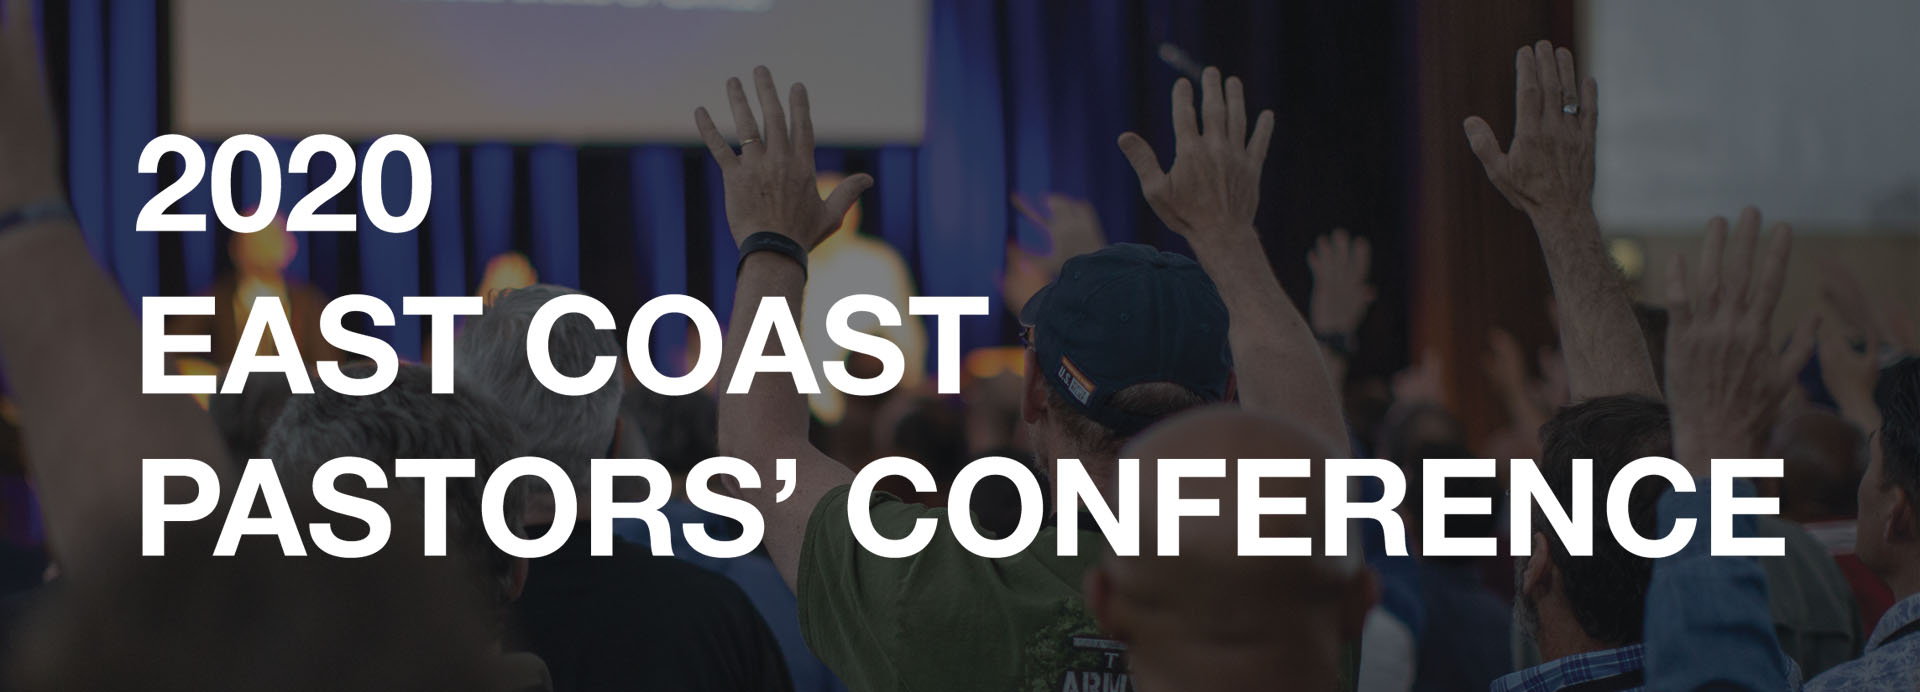 East Coast Pastors Conference 2020